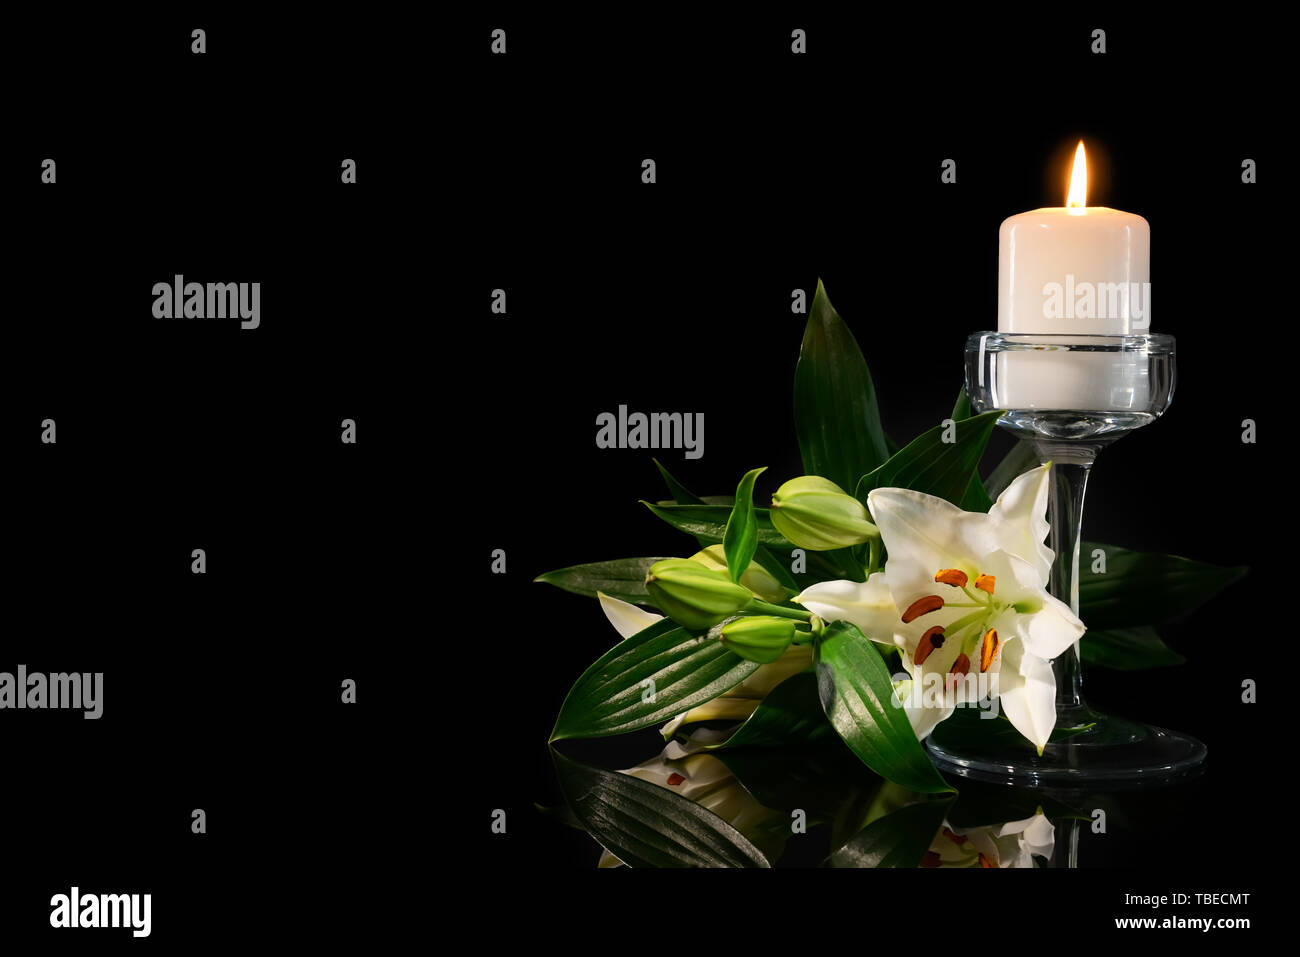 Burning candle and flowers on black background Stock Photo